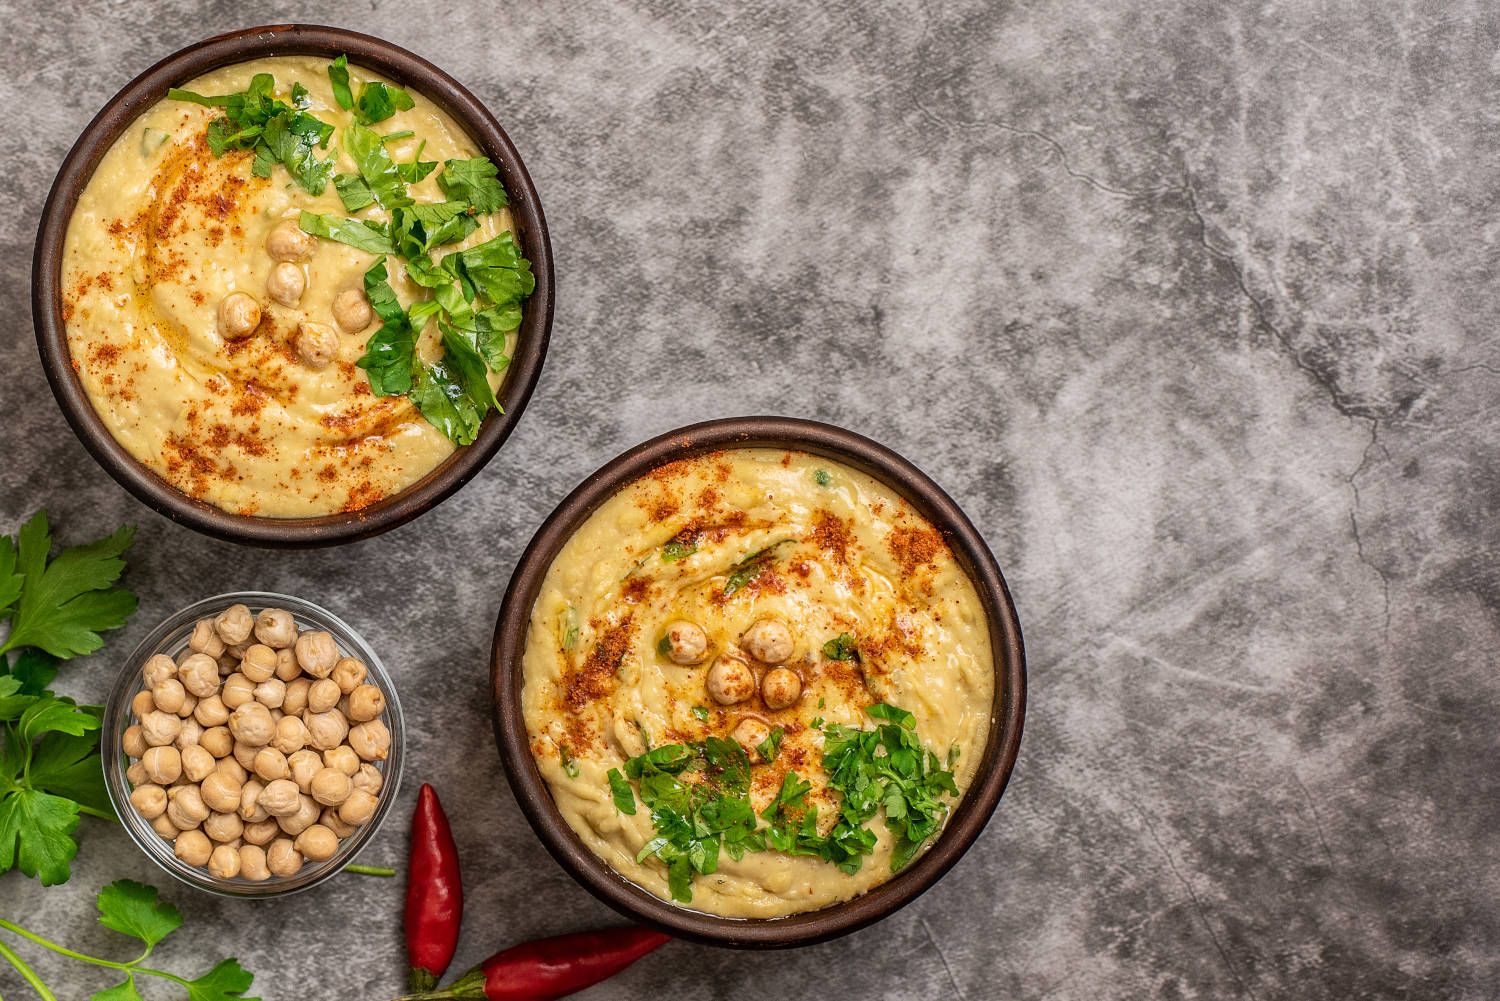 Hummus in a bowl